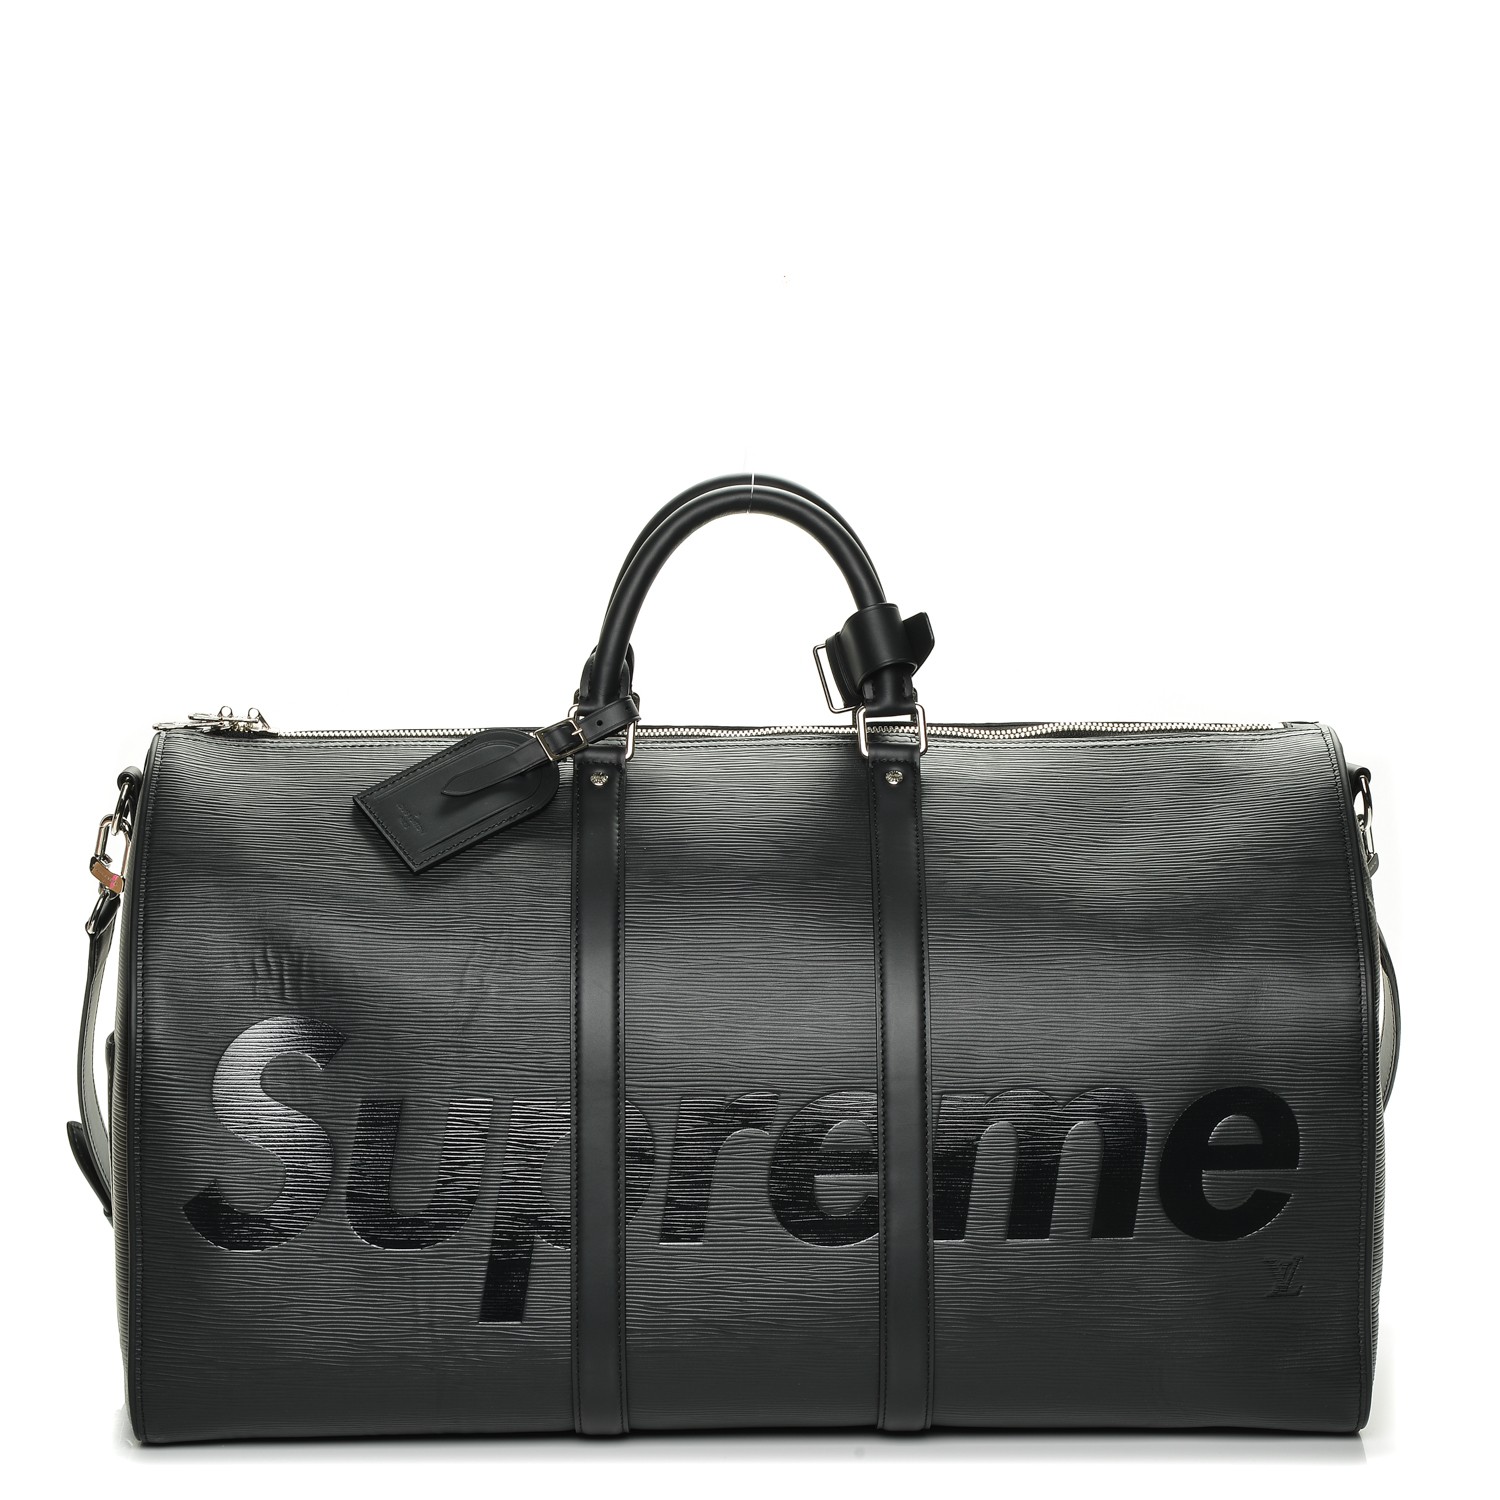 Supreme X Louis Vuitton Duffle Bag Black - Just Me and Supreme